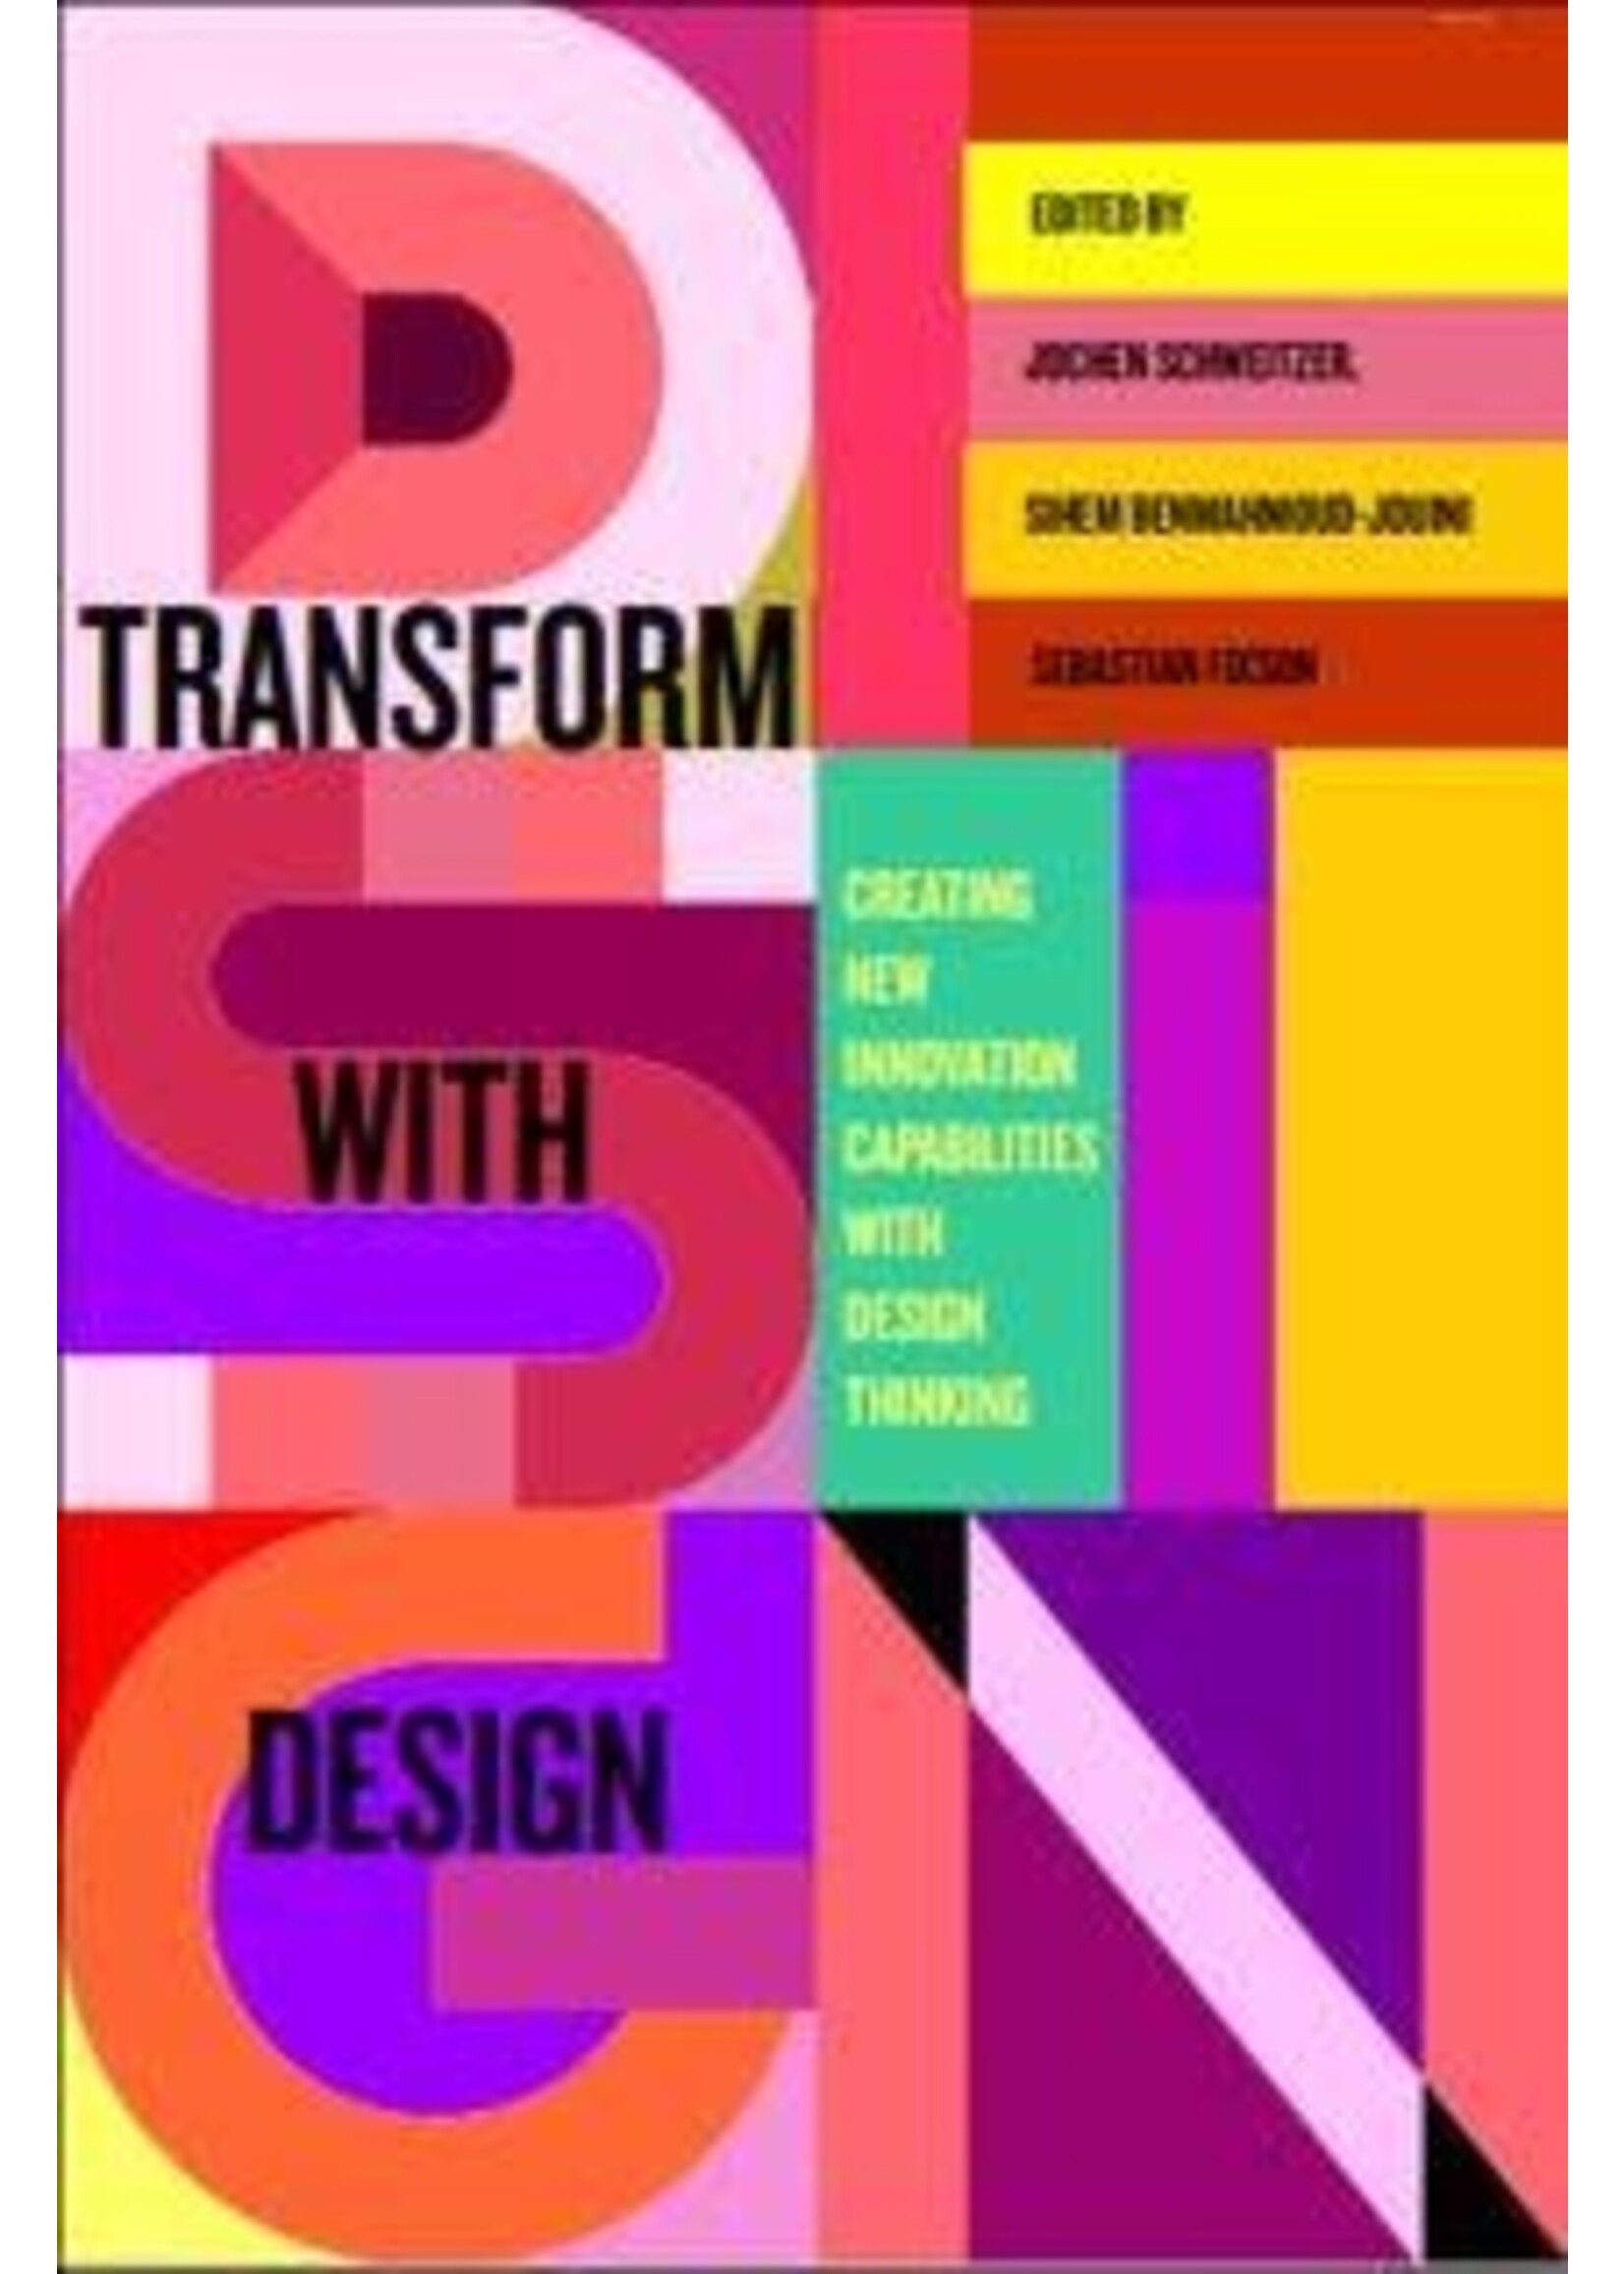 Transform with Design: Creating New Innovation Capabilities with Design Thinking by Jochen Schweitzer, Sihem BenMahmoud-Jouini, Sebastian Fixson